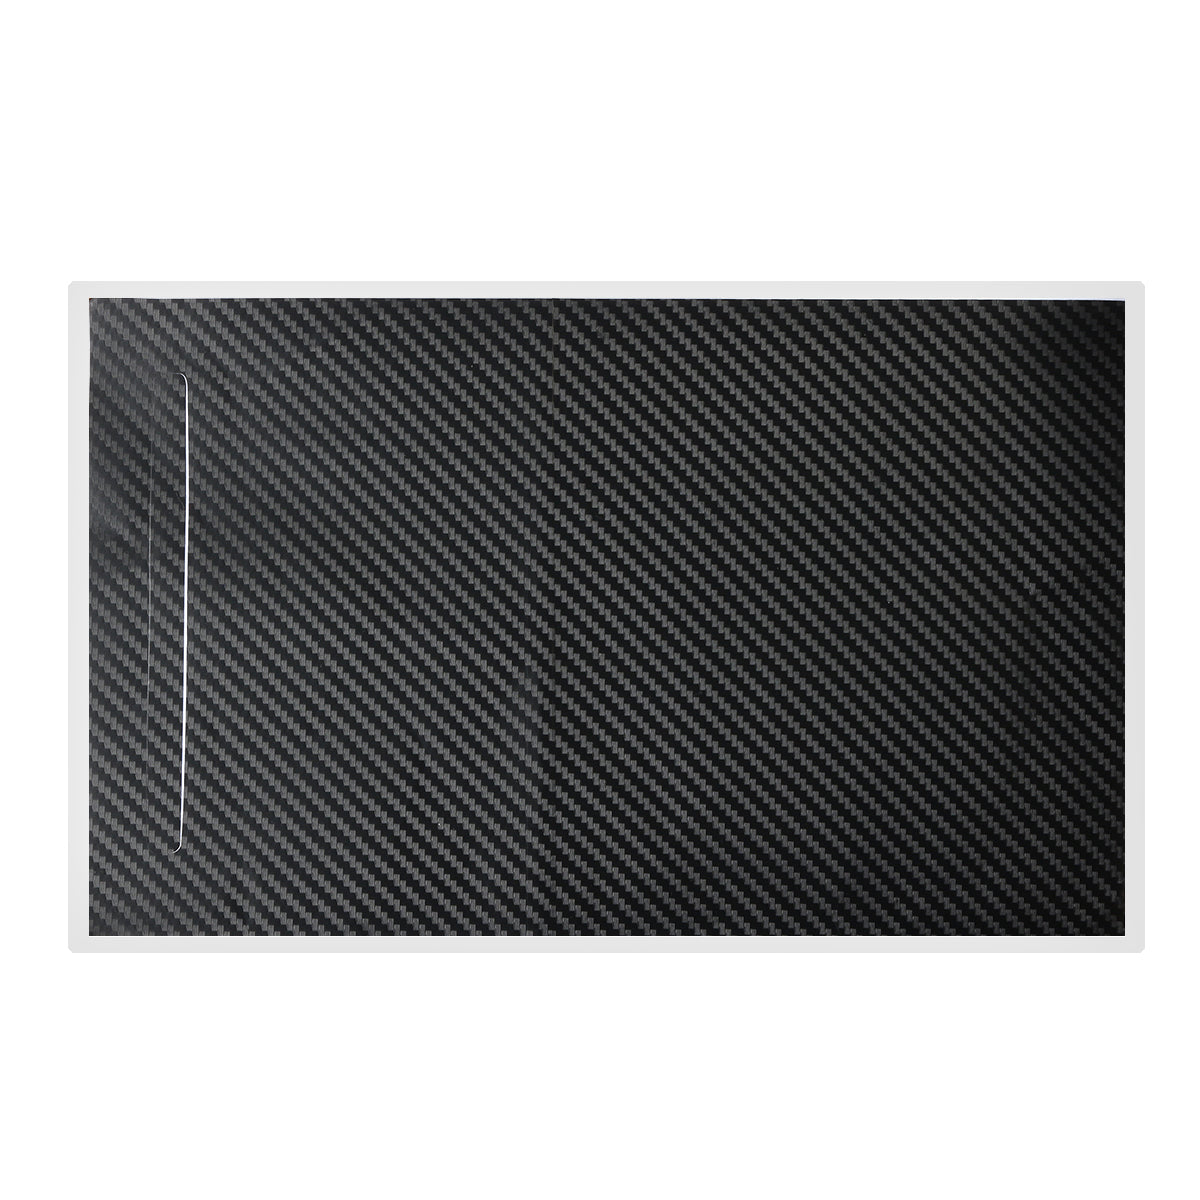 Dark Slate Gray 29x19.5cm Carbon Fiber PVC Car Sticker Decals Decoration for Tesla Model S and X